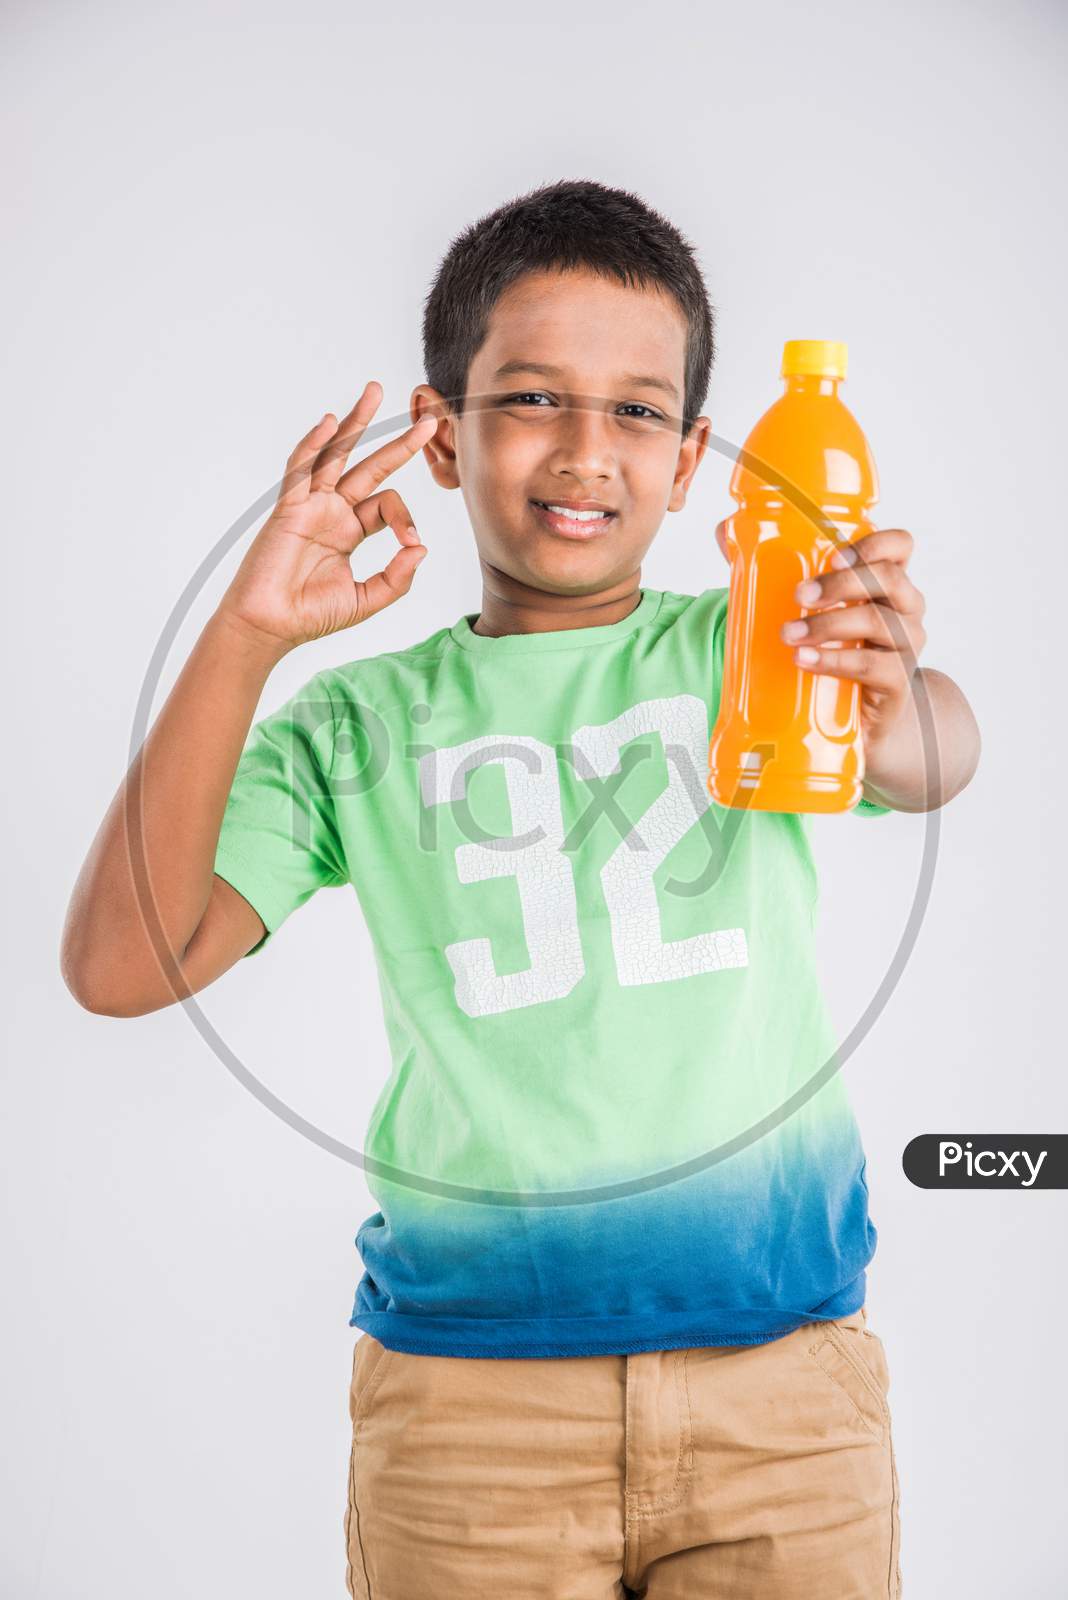 Cute little boy drinking mango juice or cold drink / beverage